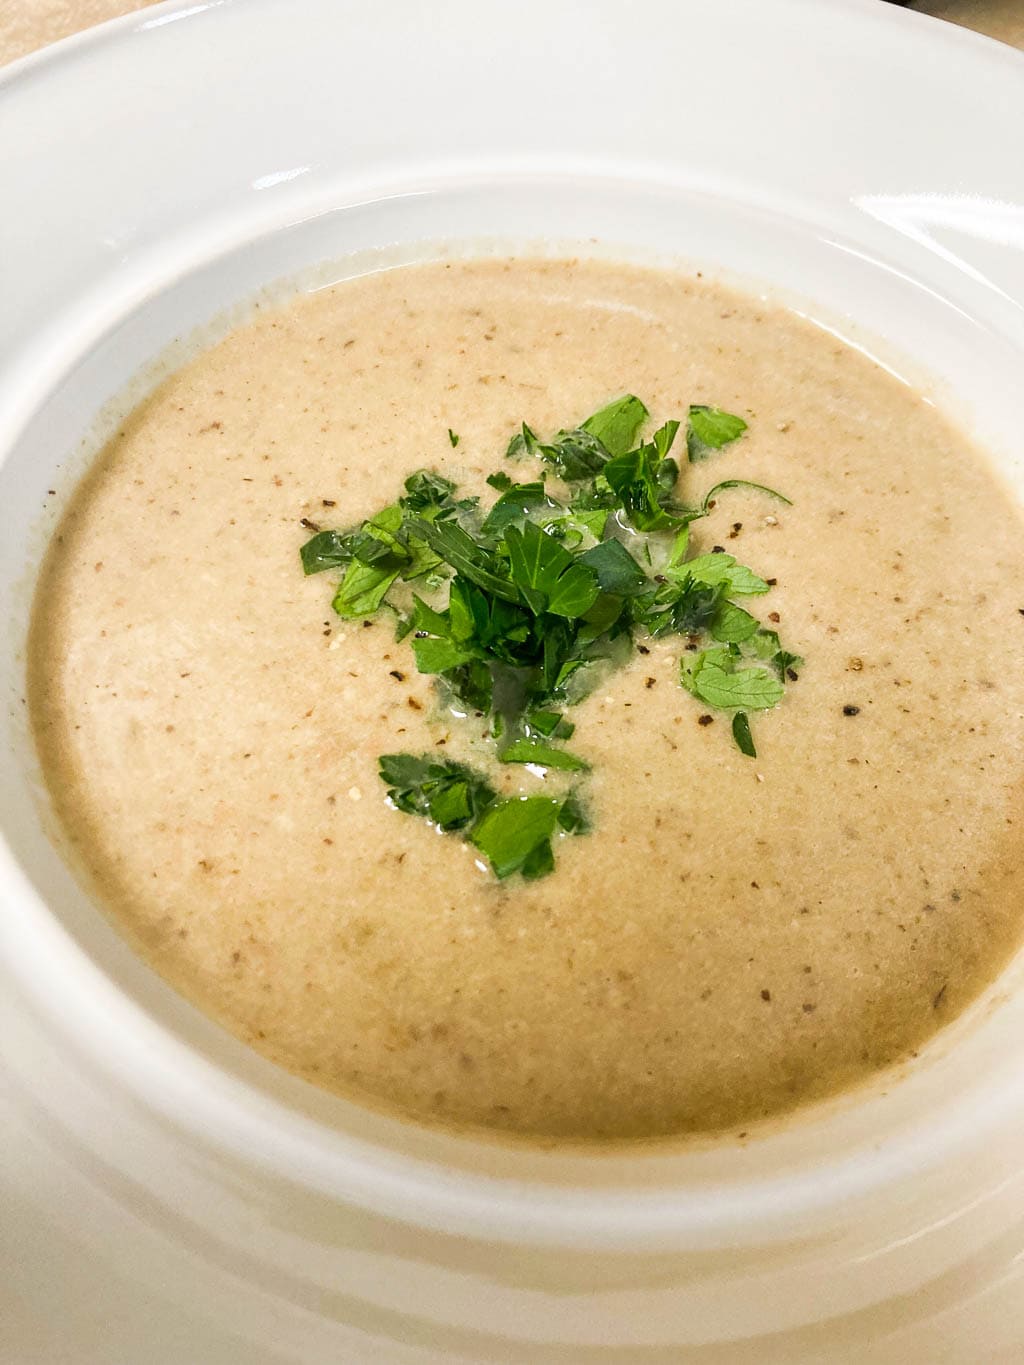 Algonquin hazelnut soup with parsley